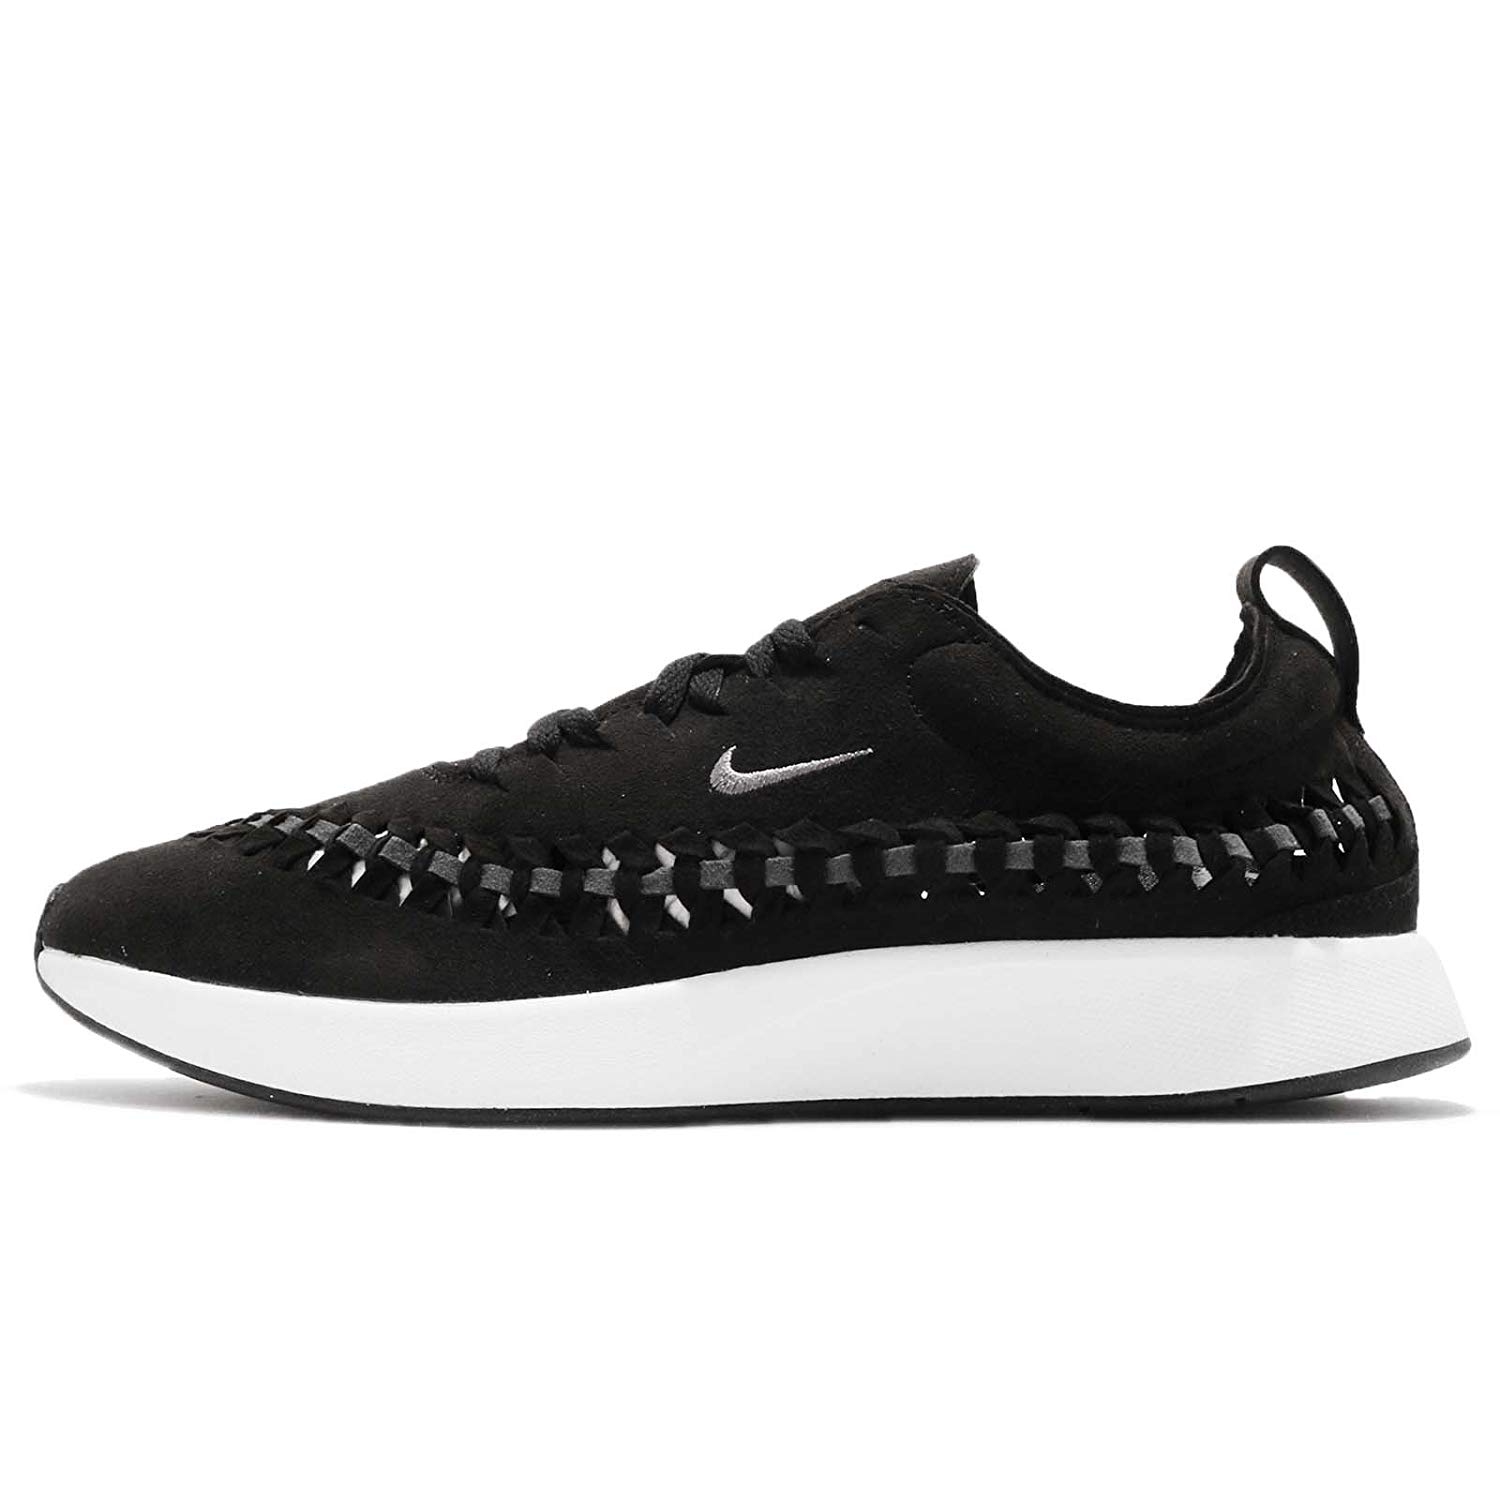 Nike Men's Dualtone Racer Woven Running Shoes (9.5, Black/Dark Grey-white) - image 1 of 6